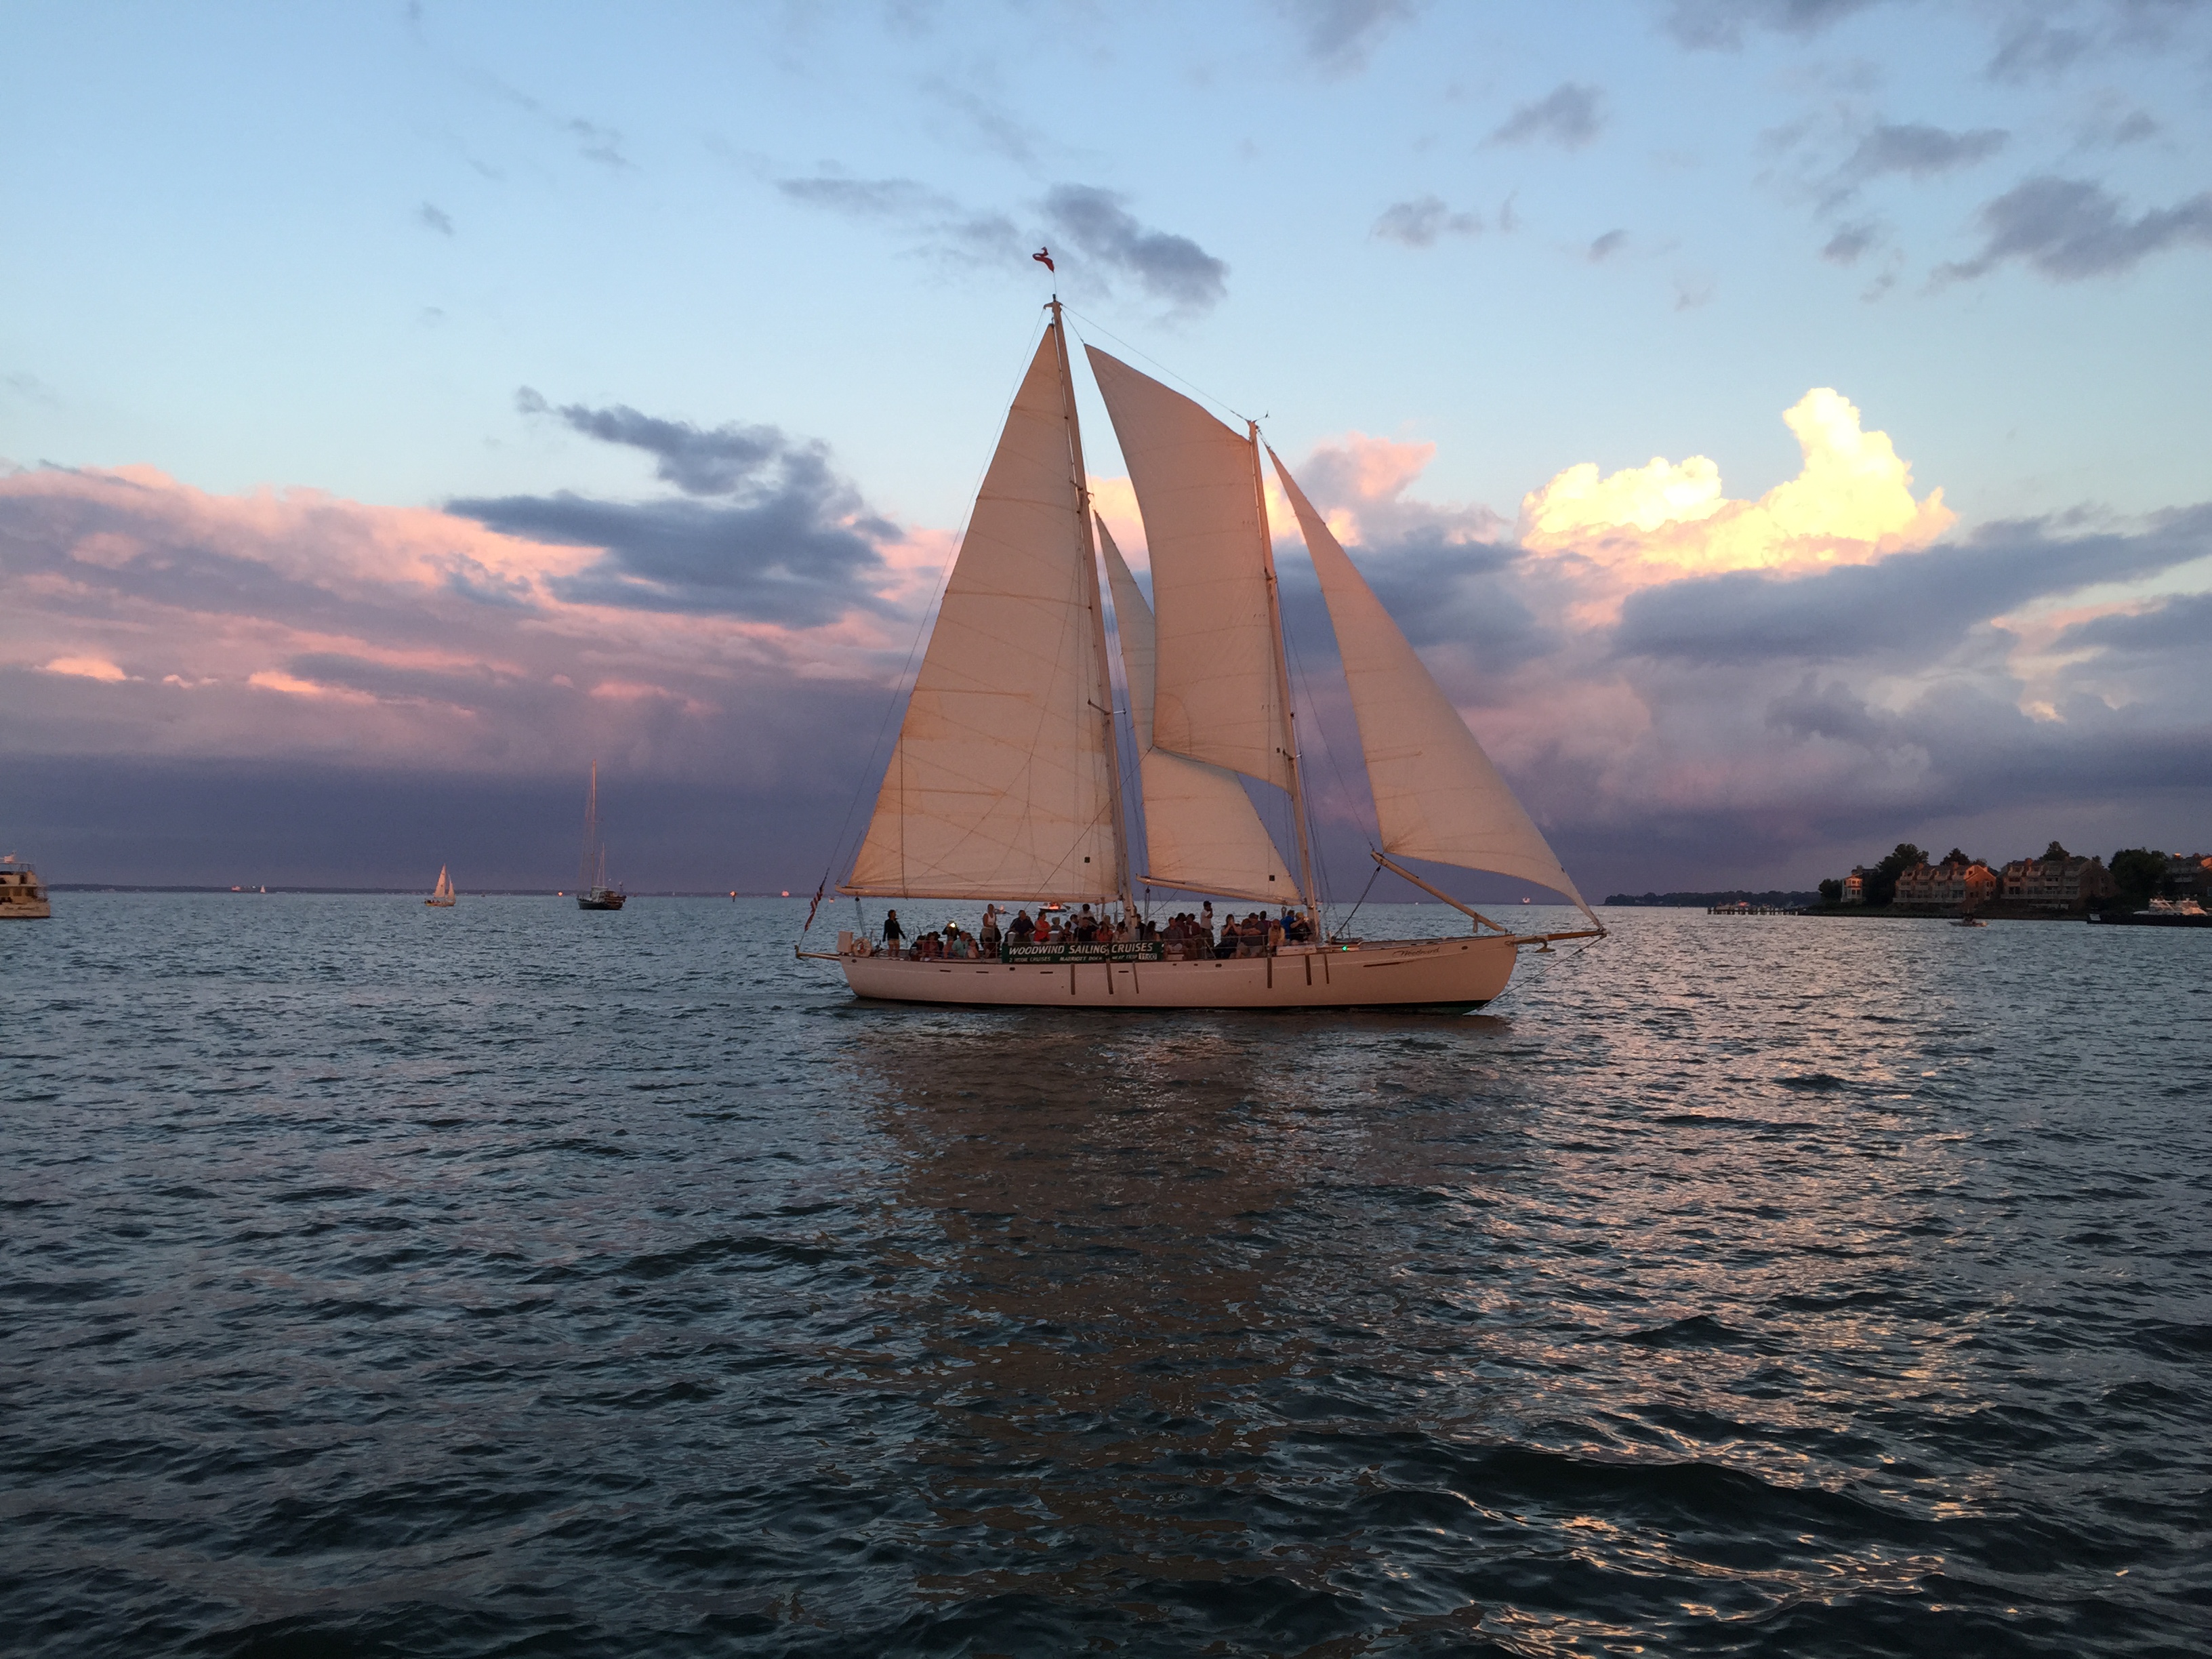 Schooner full of guests under full sunset sail on dark blue water